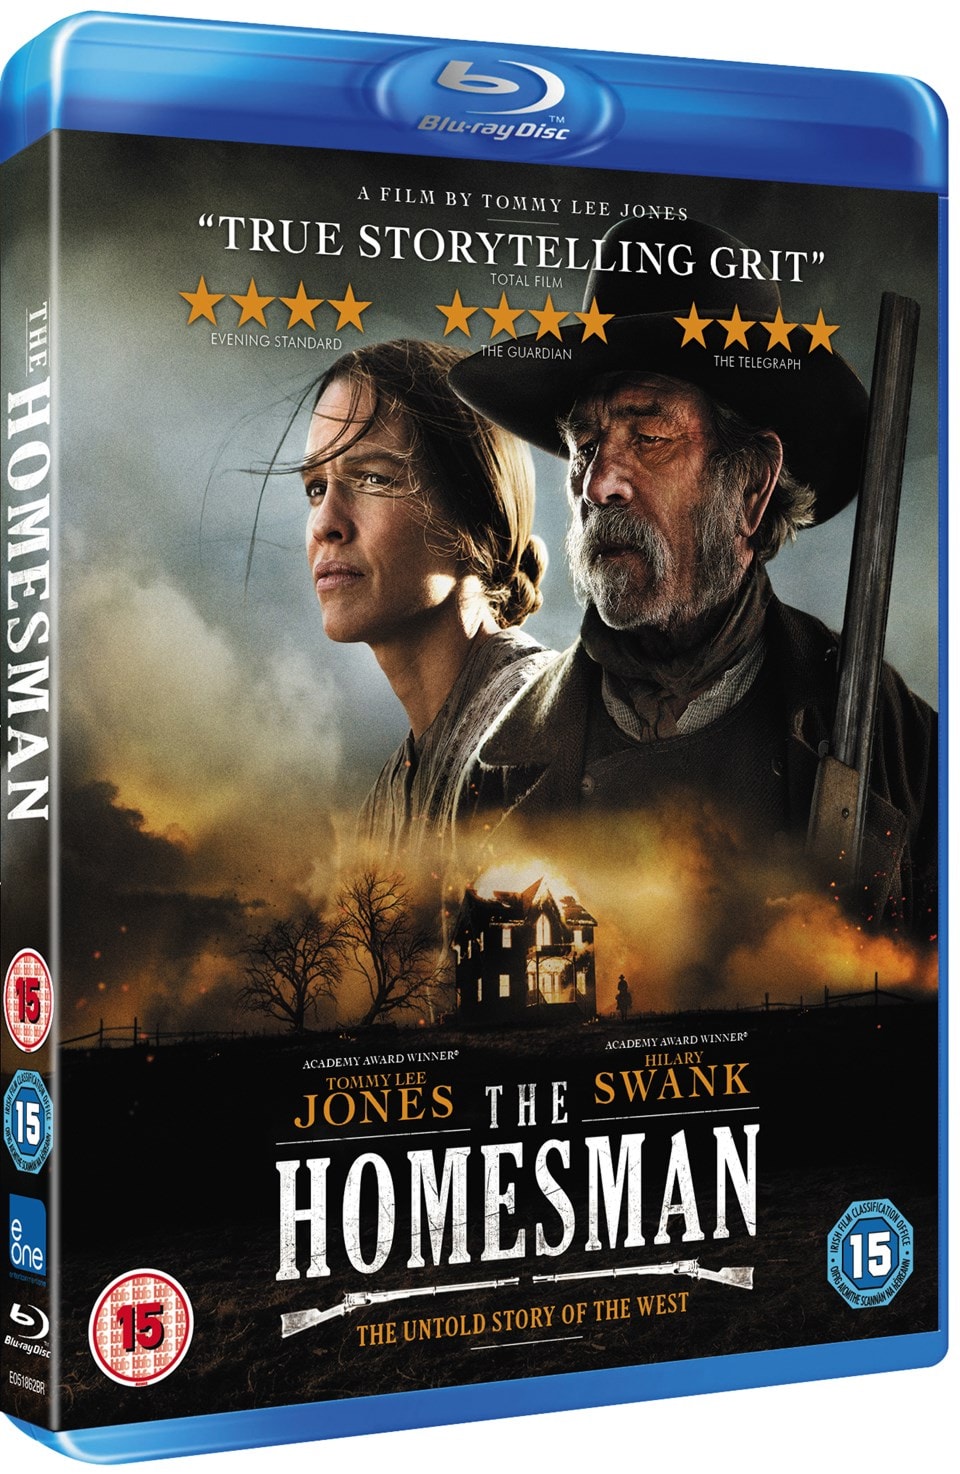 The Homesman | Blu-ray | Free shipping over £20 | HMV Store